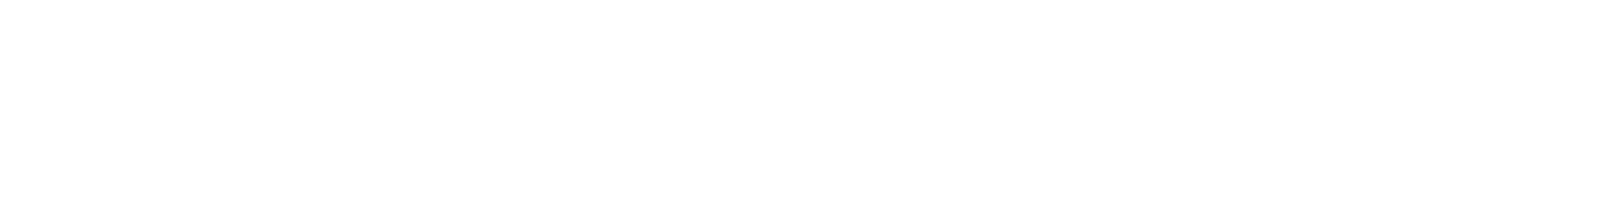 Sciencenter logo